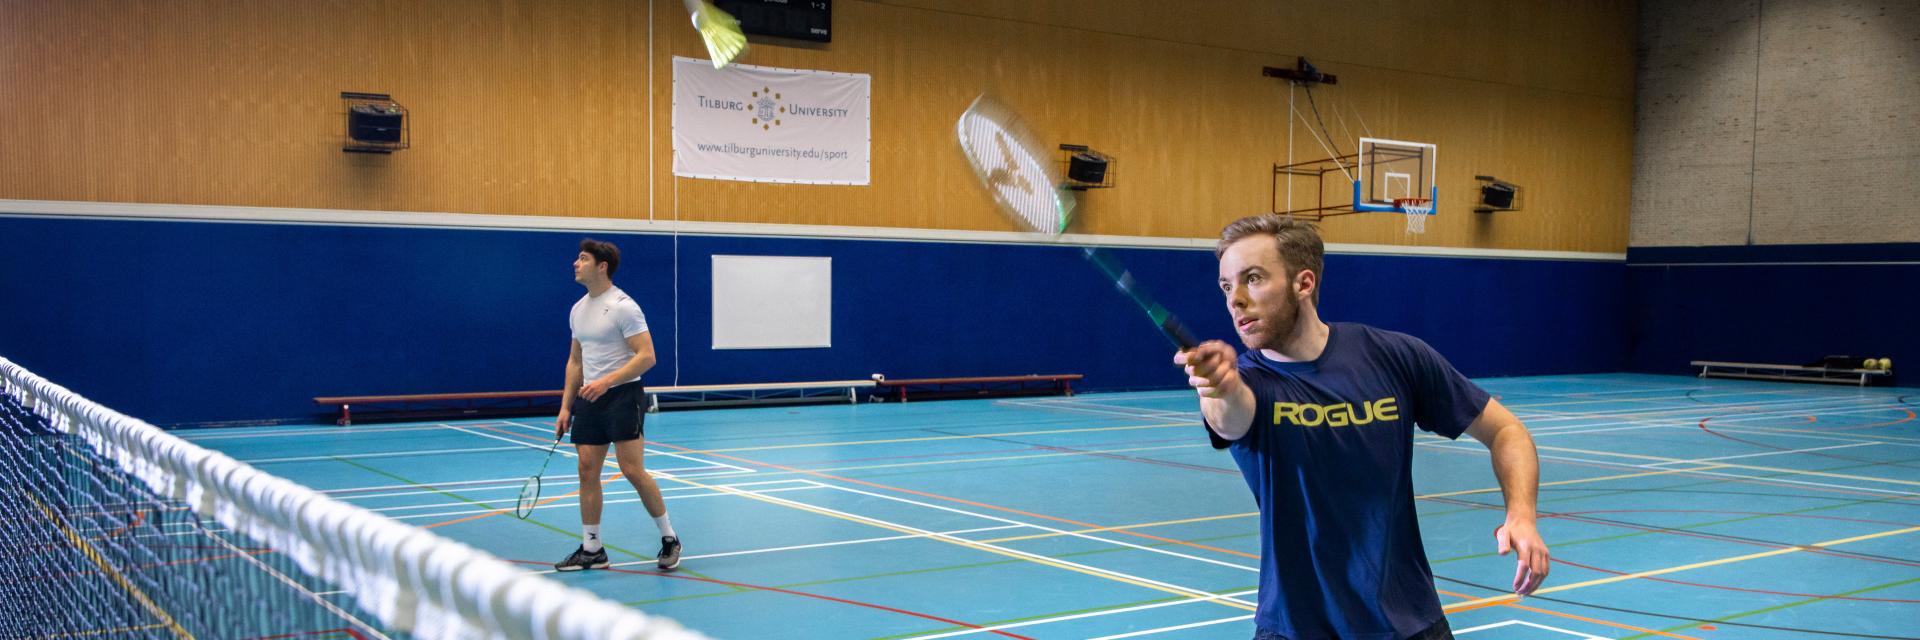 Badminton Tilburg University